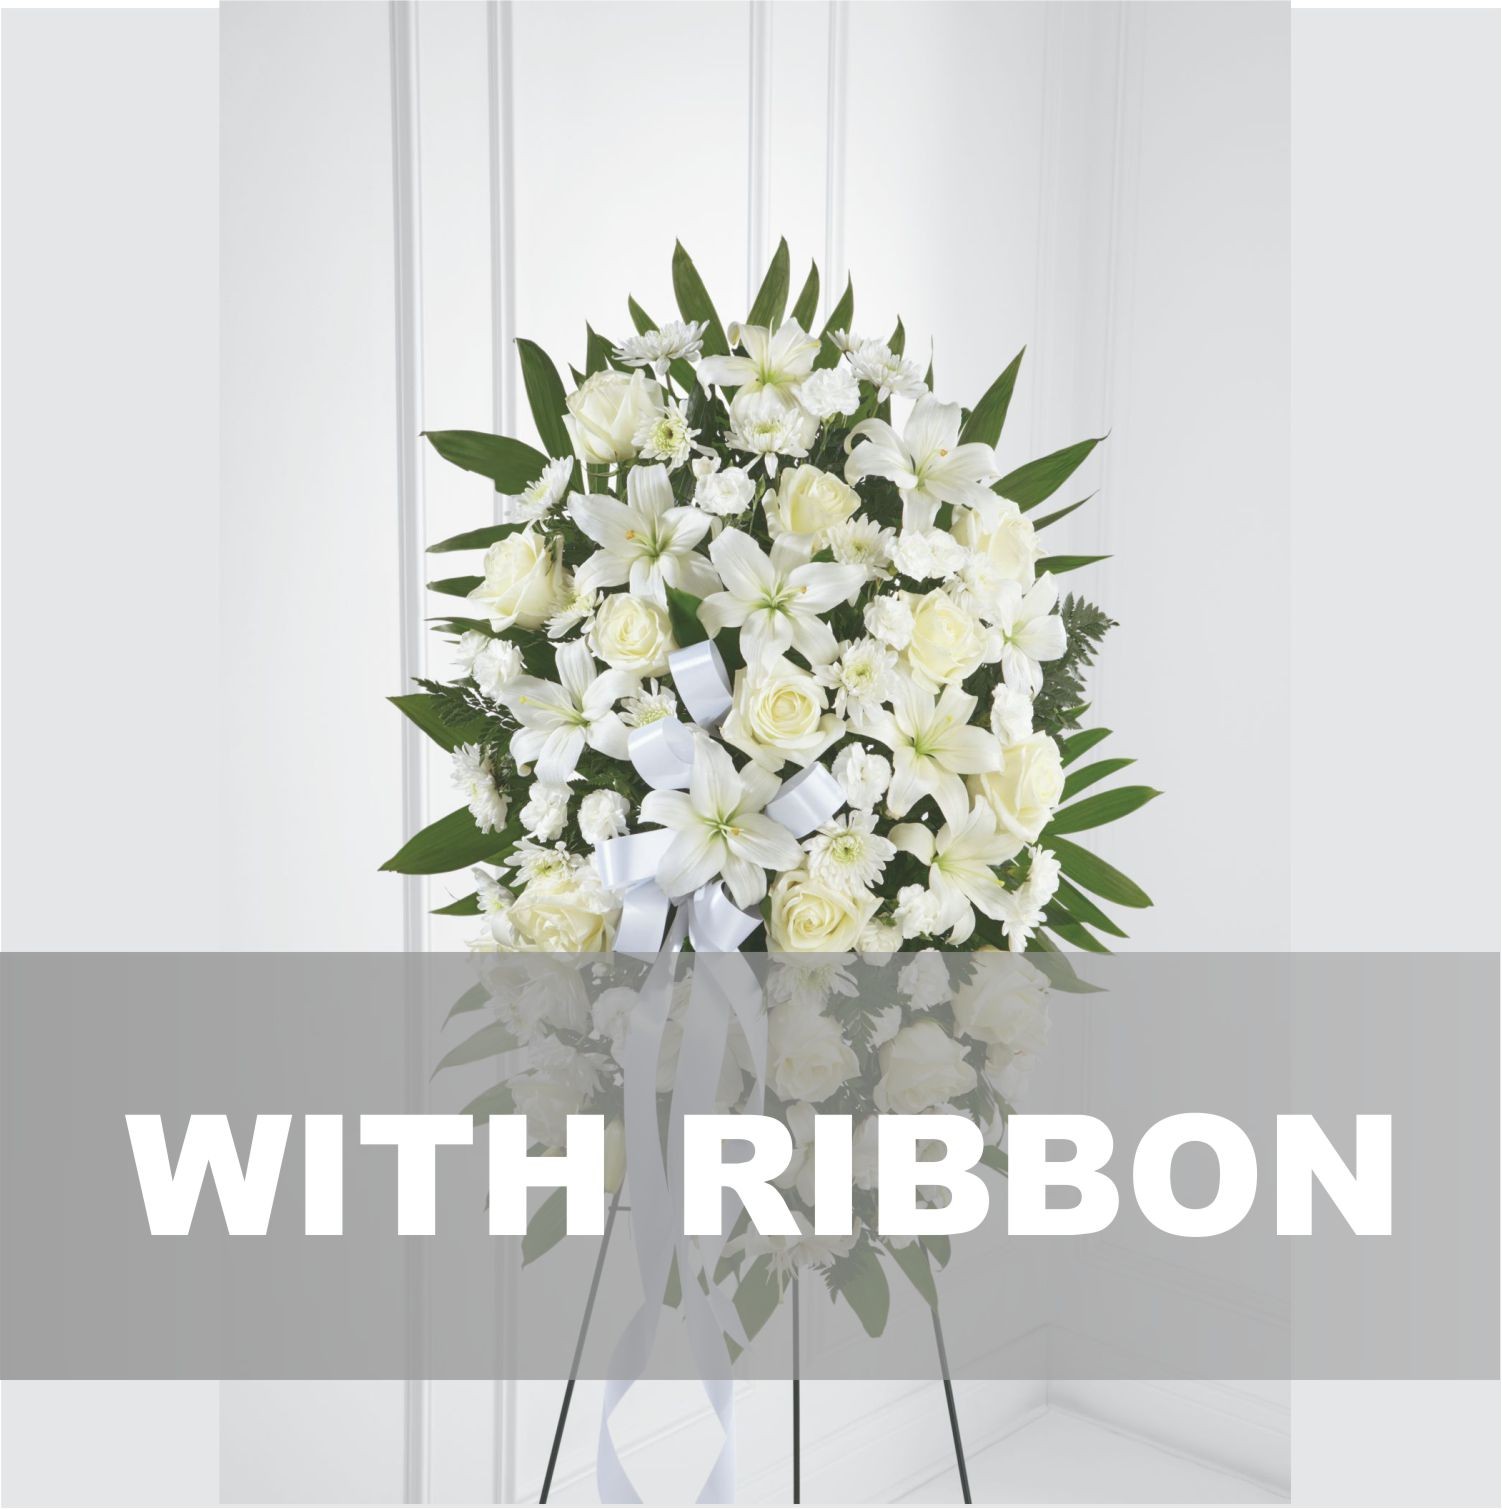 Funeral Flowers Delivered: Funeral Arrangements